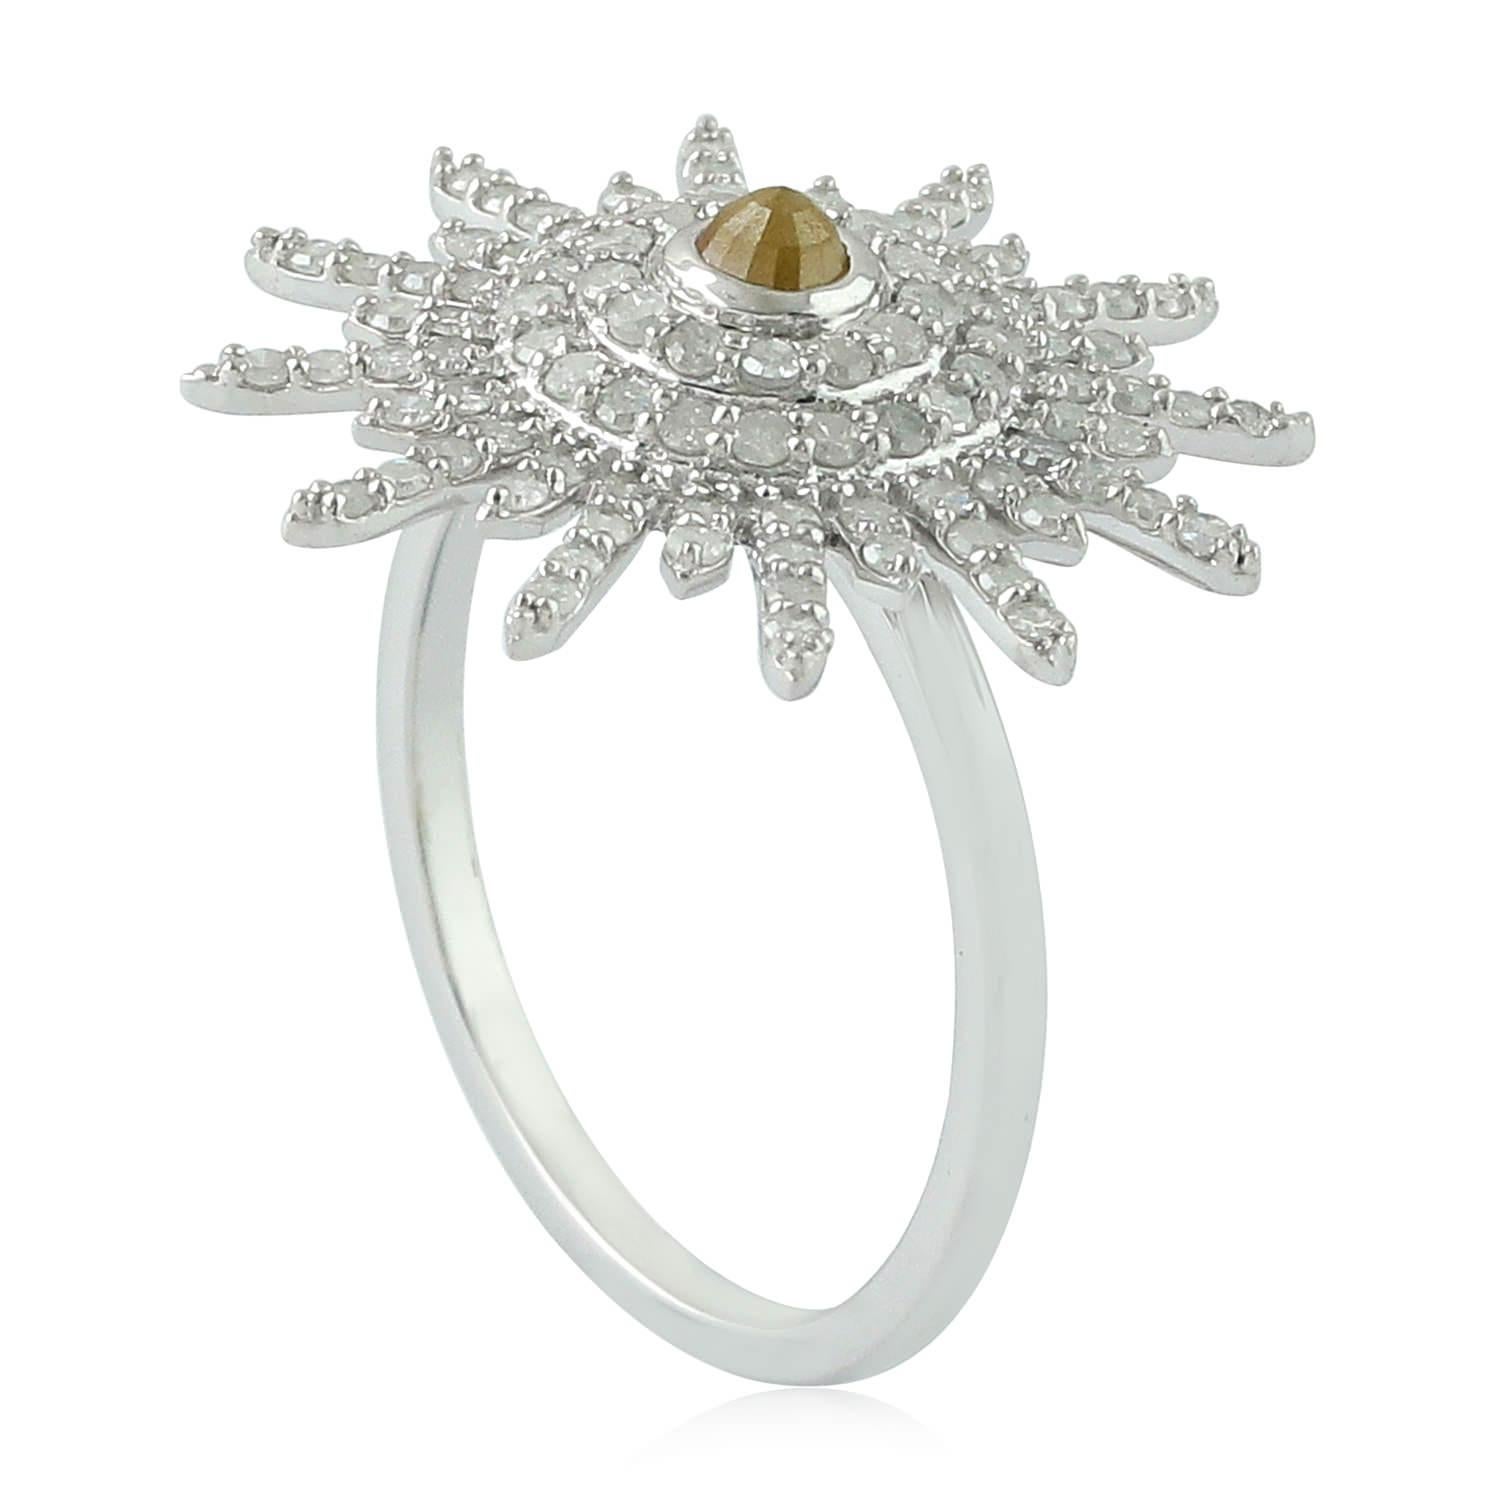 Round Cut 14 Karat White Gold 0.90 Carat Diamond Pave Cocktail Ring Flower Design Jewelry